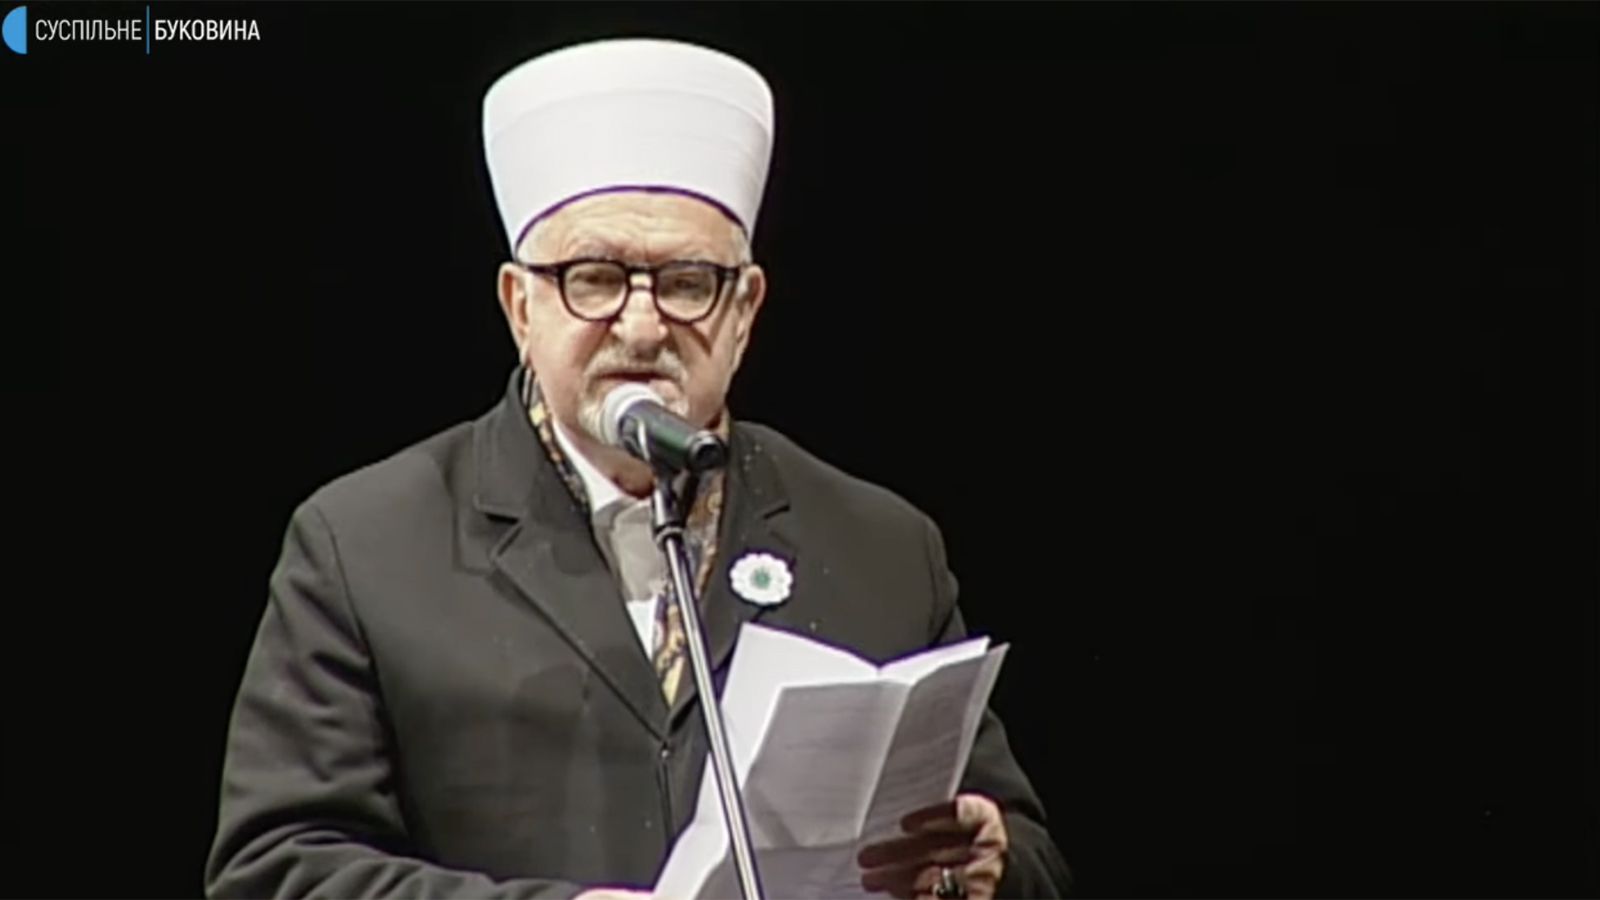 Grand Mufti Mustafa Ceric, Emeritus Grand Mufti of Bosnia and present Head of the World Bosniak Congress, speaks during a gathering of interfaith leaders in Chernivtsi, Ukraine, Tuesday, April 12, 2022. Video screen grab